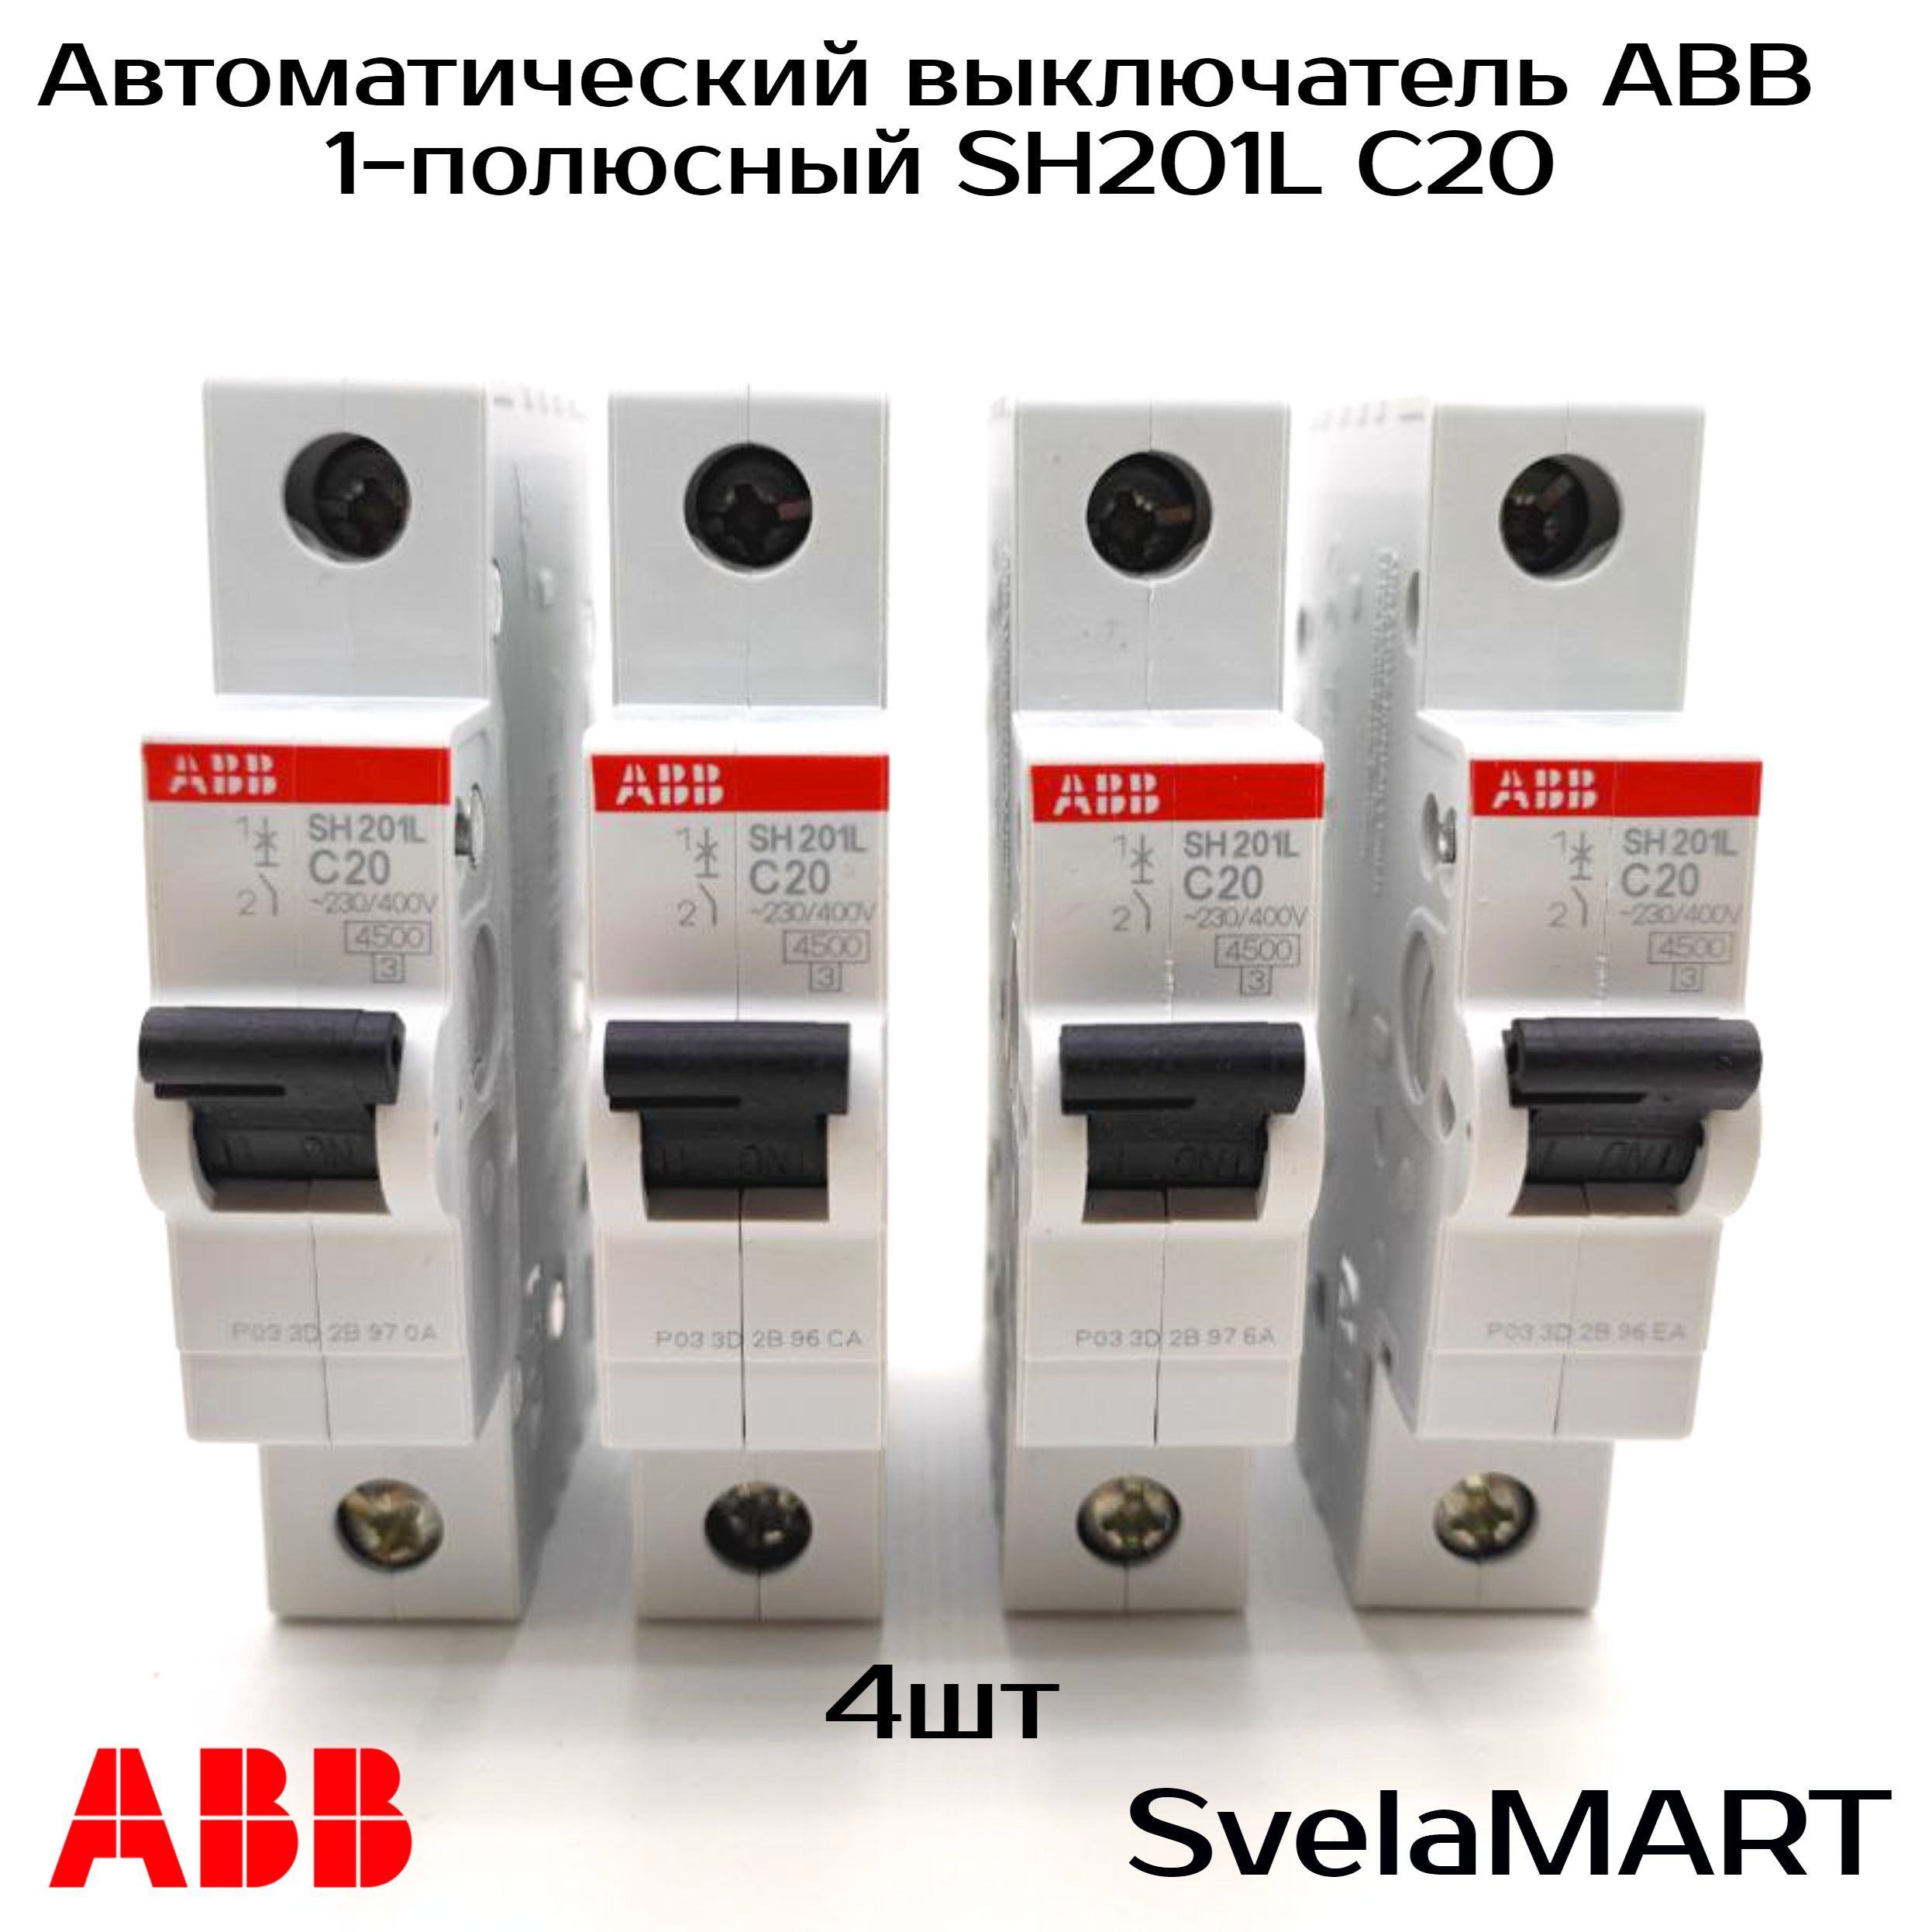 Автоматические выключатели abb 10а. Автоматы ABB 25 ампер в щитке. Ot40f3с ABB 40a. 20а с sh201 6.0ка sh201 c 20 ABB. Автоматические выключатели 6ка.